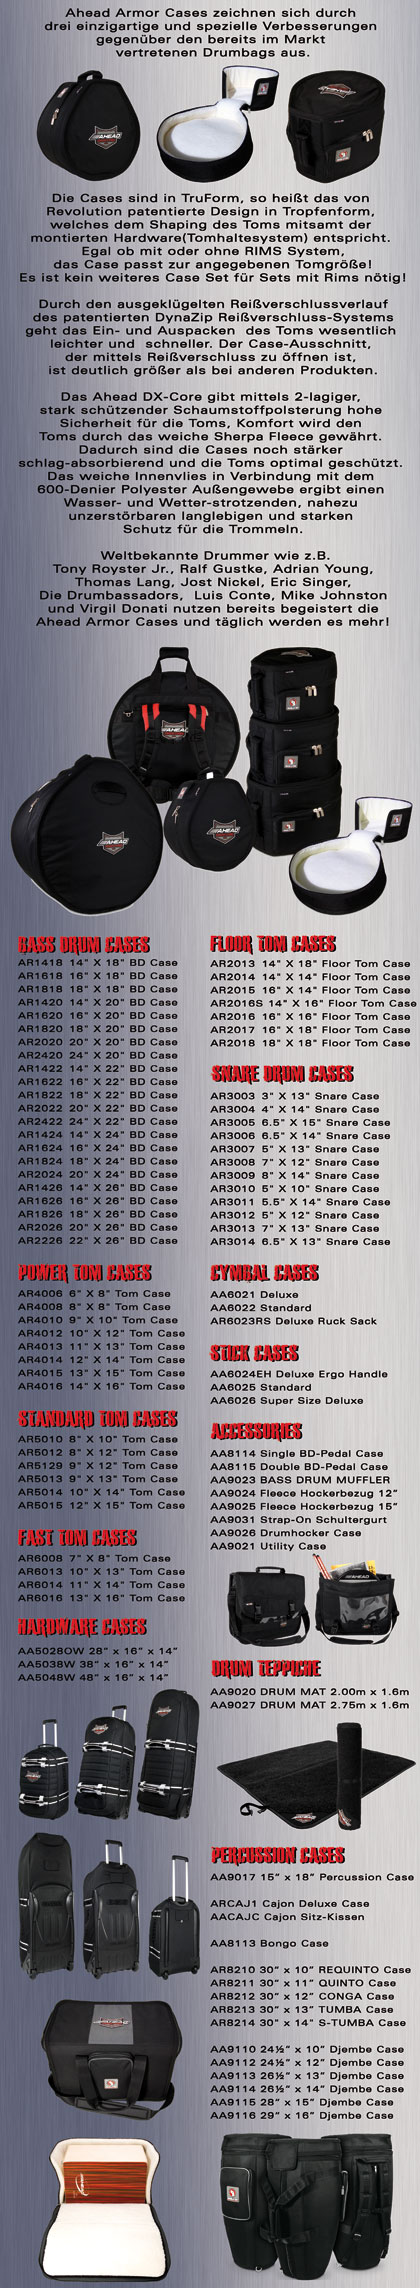 Armor Case bottom